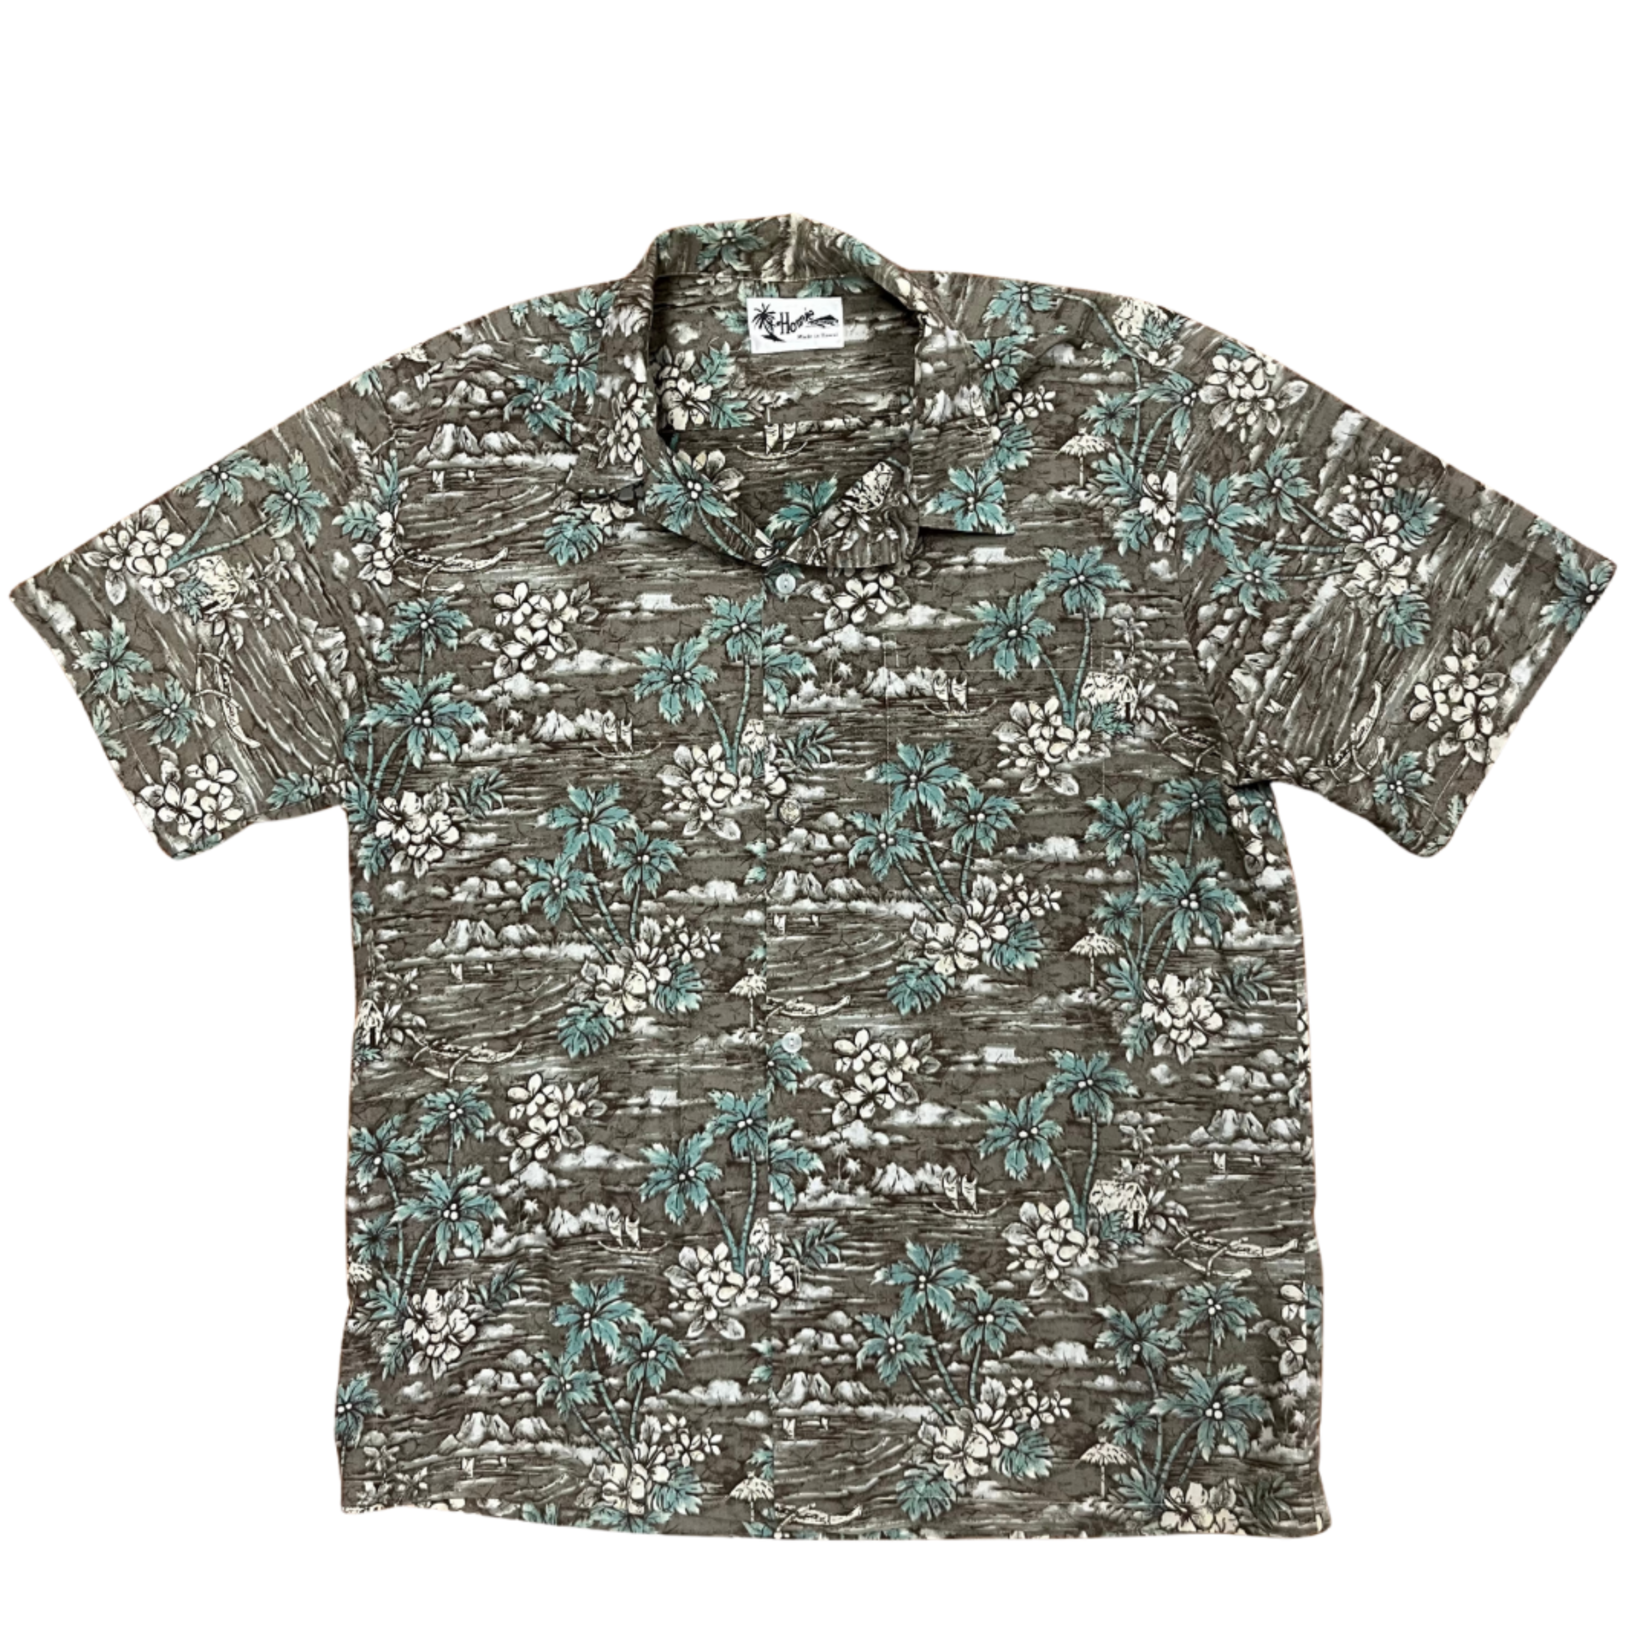 Mission Zero Men’s Vintage Aloha Shirt - Howie - Coconut, Plumeria, Sailing Island Print - XL